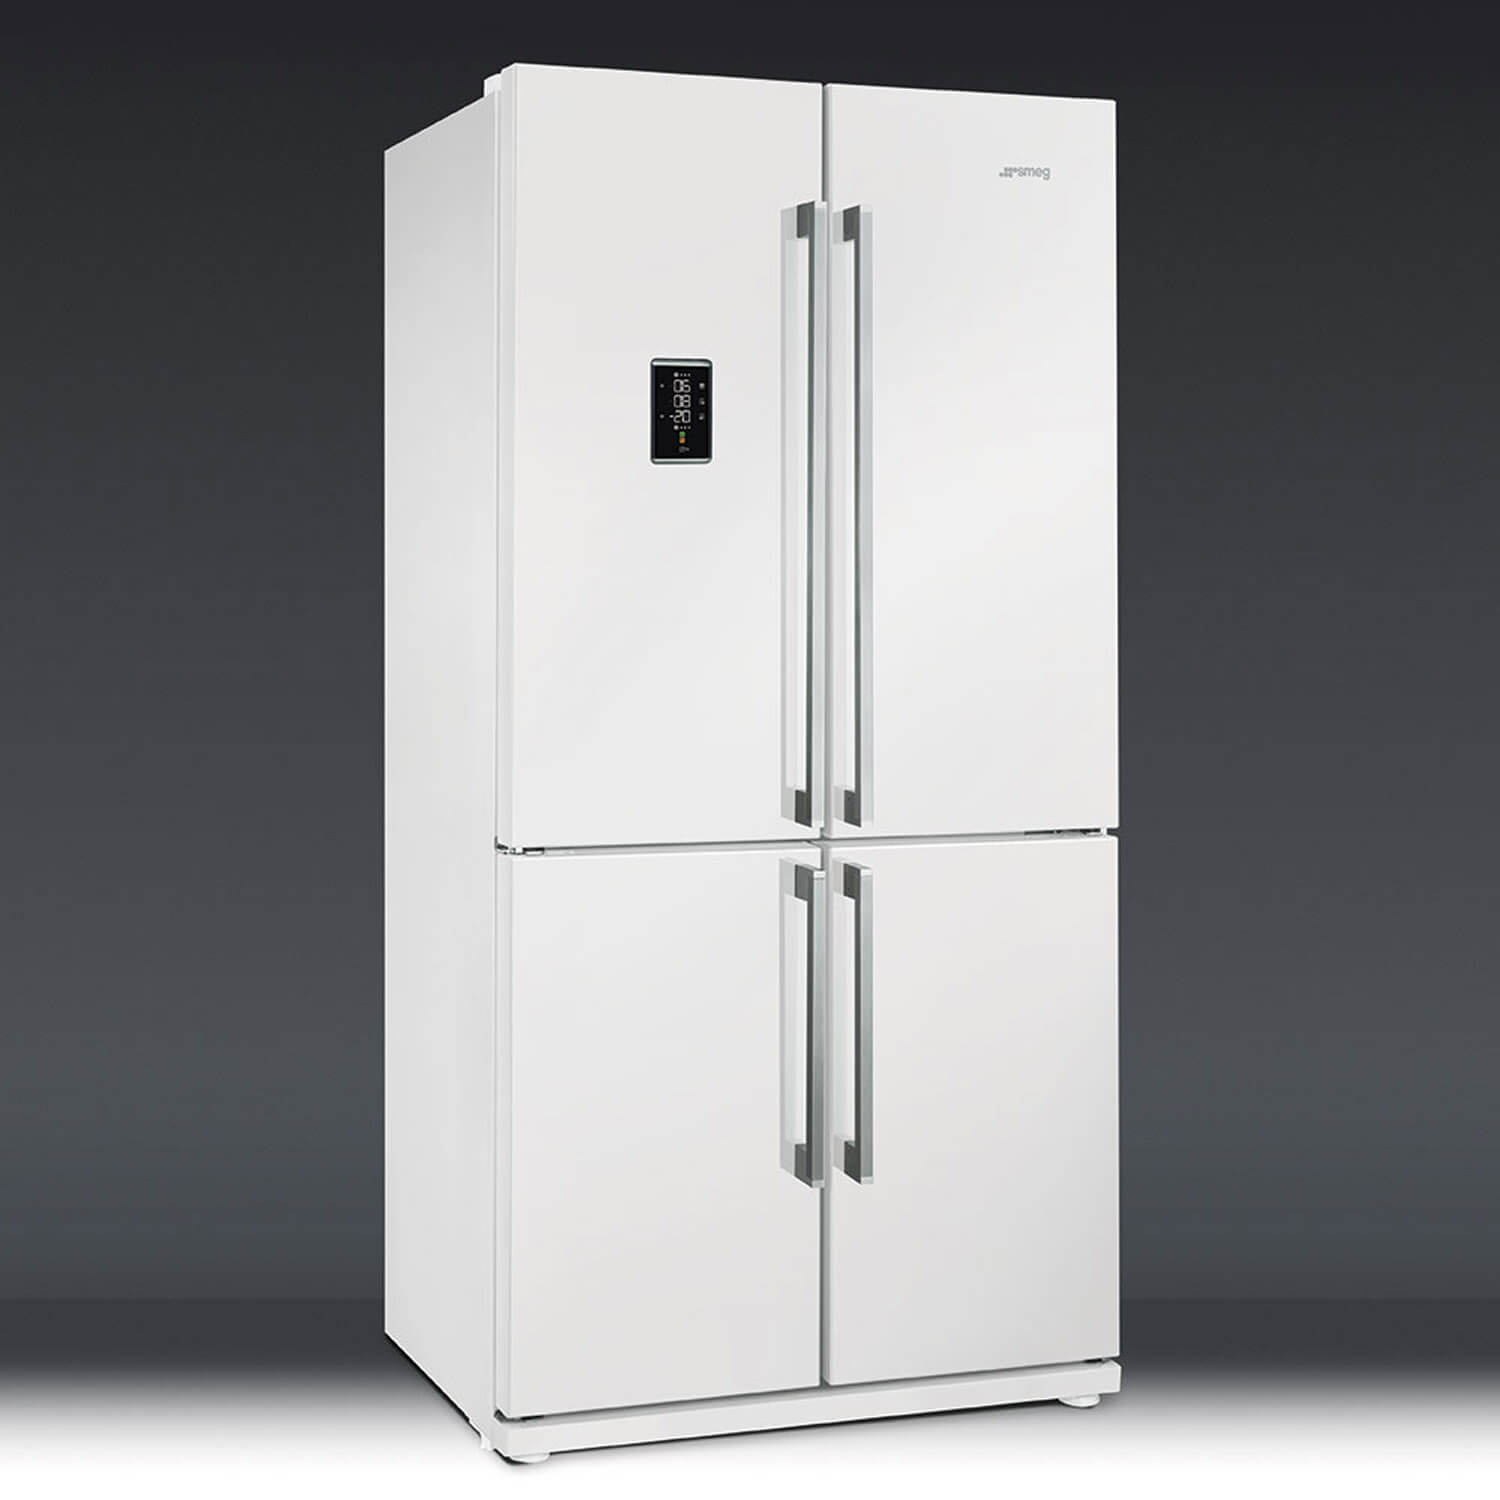 Smeg Side-by-Side Kühlschrank mit Frenchdoors. Foto: Smeg